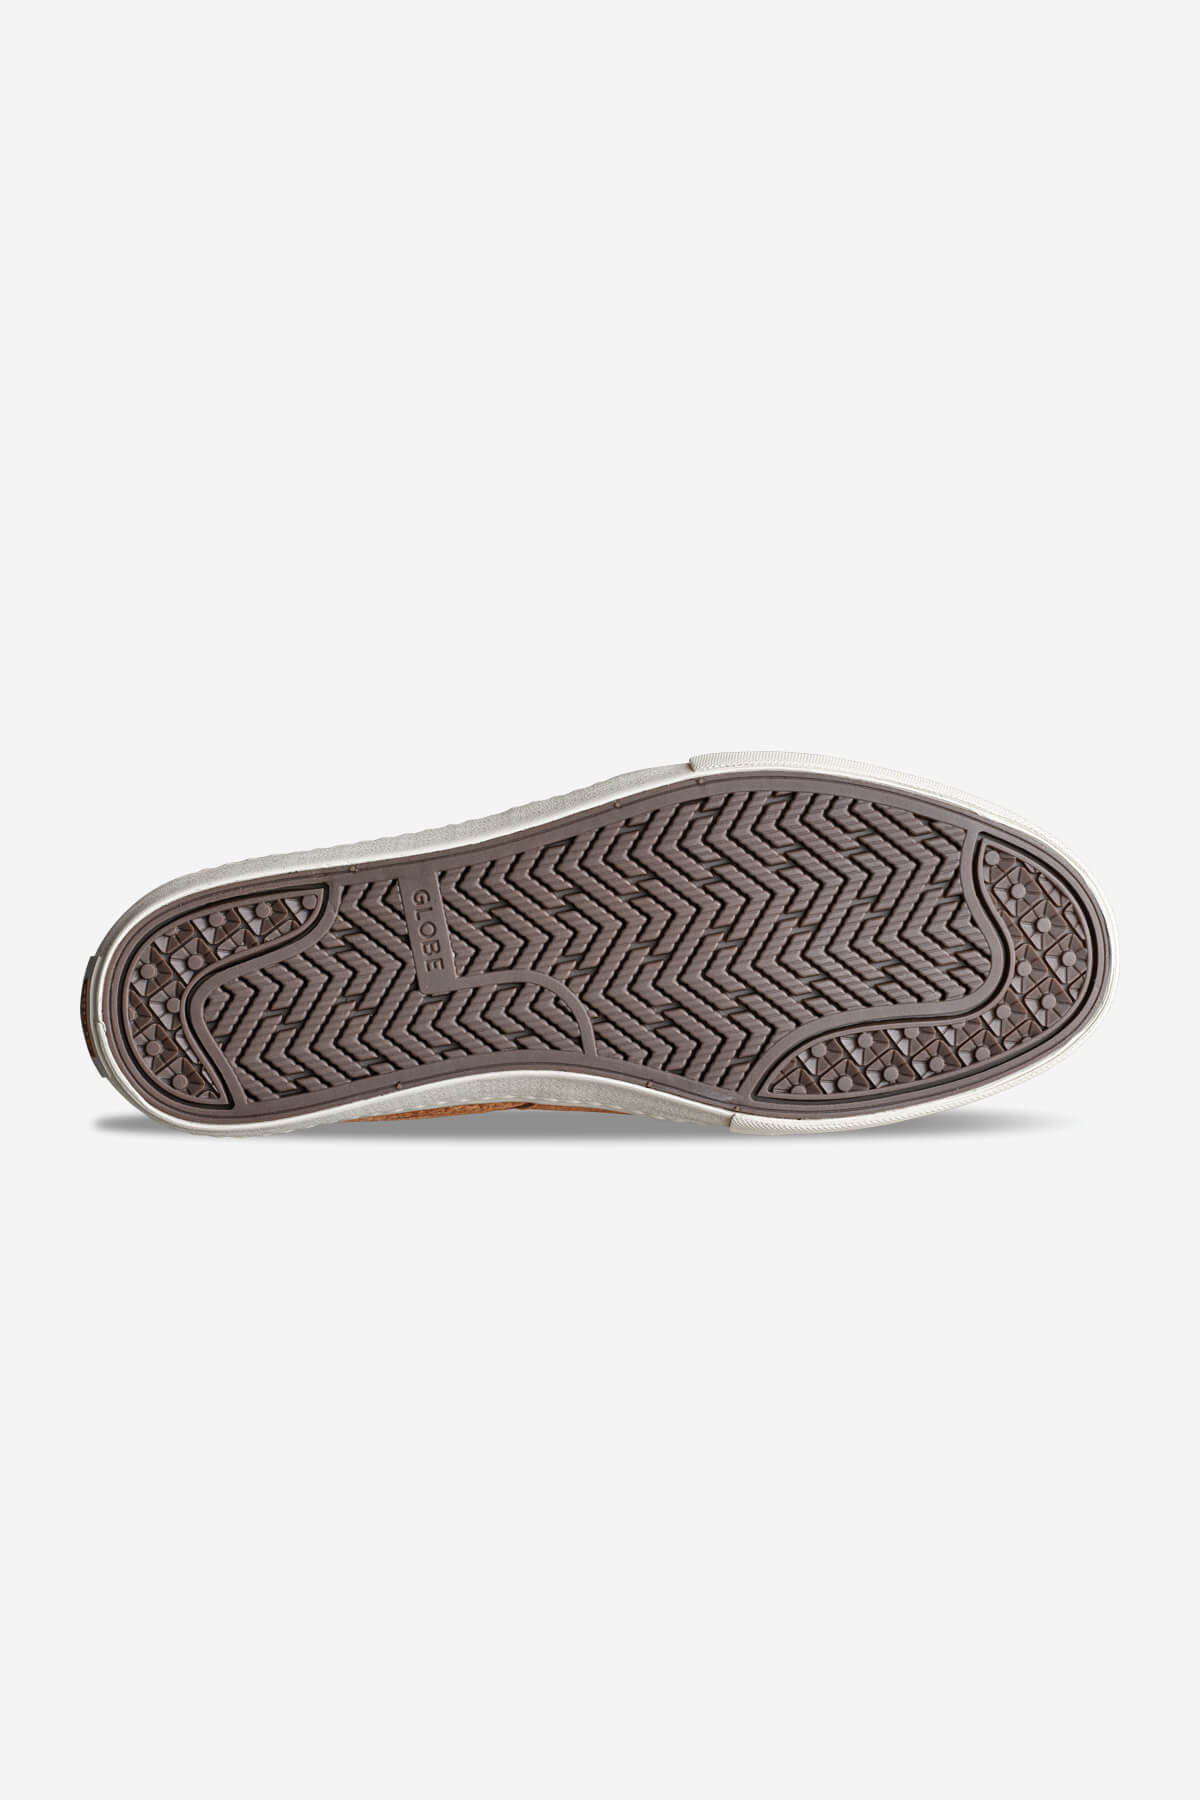 chaussures liaizon cashew antique skateboard